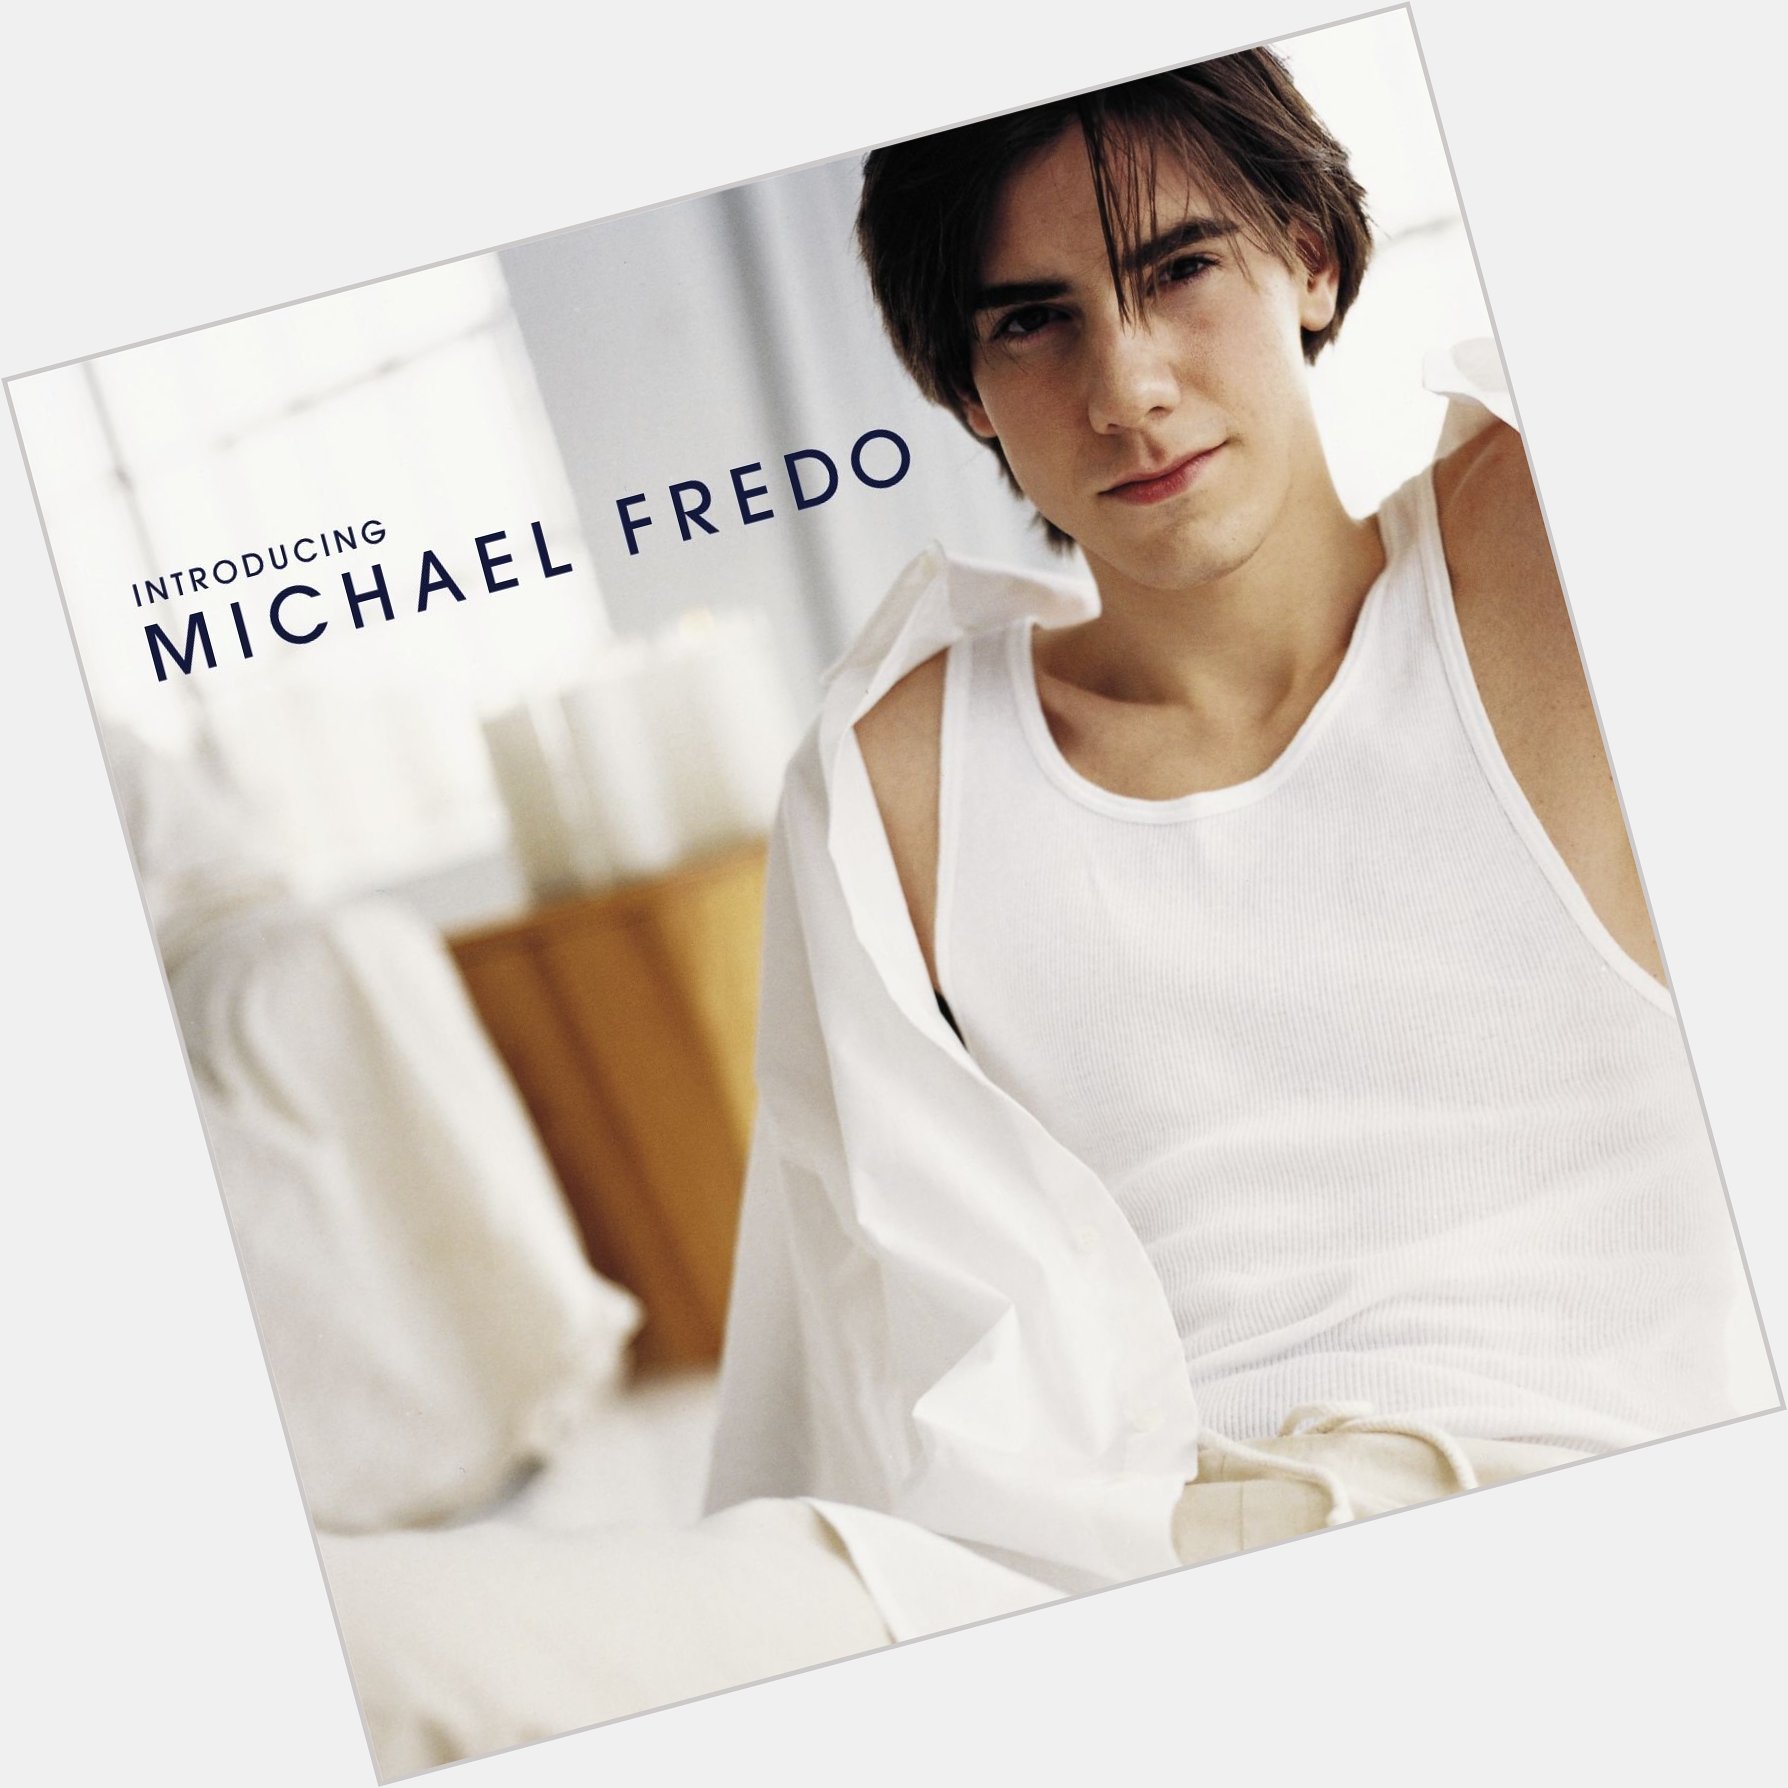 Michael Fredo  